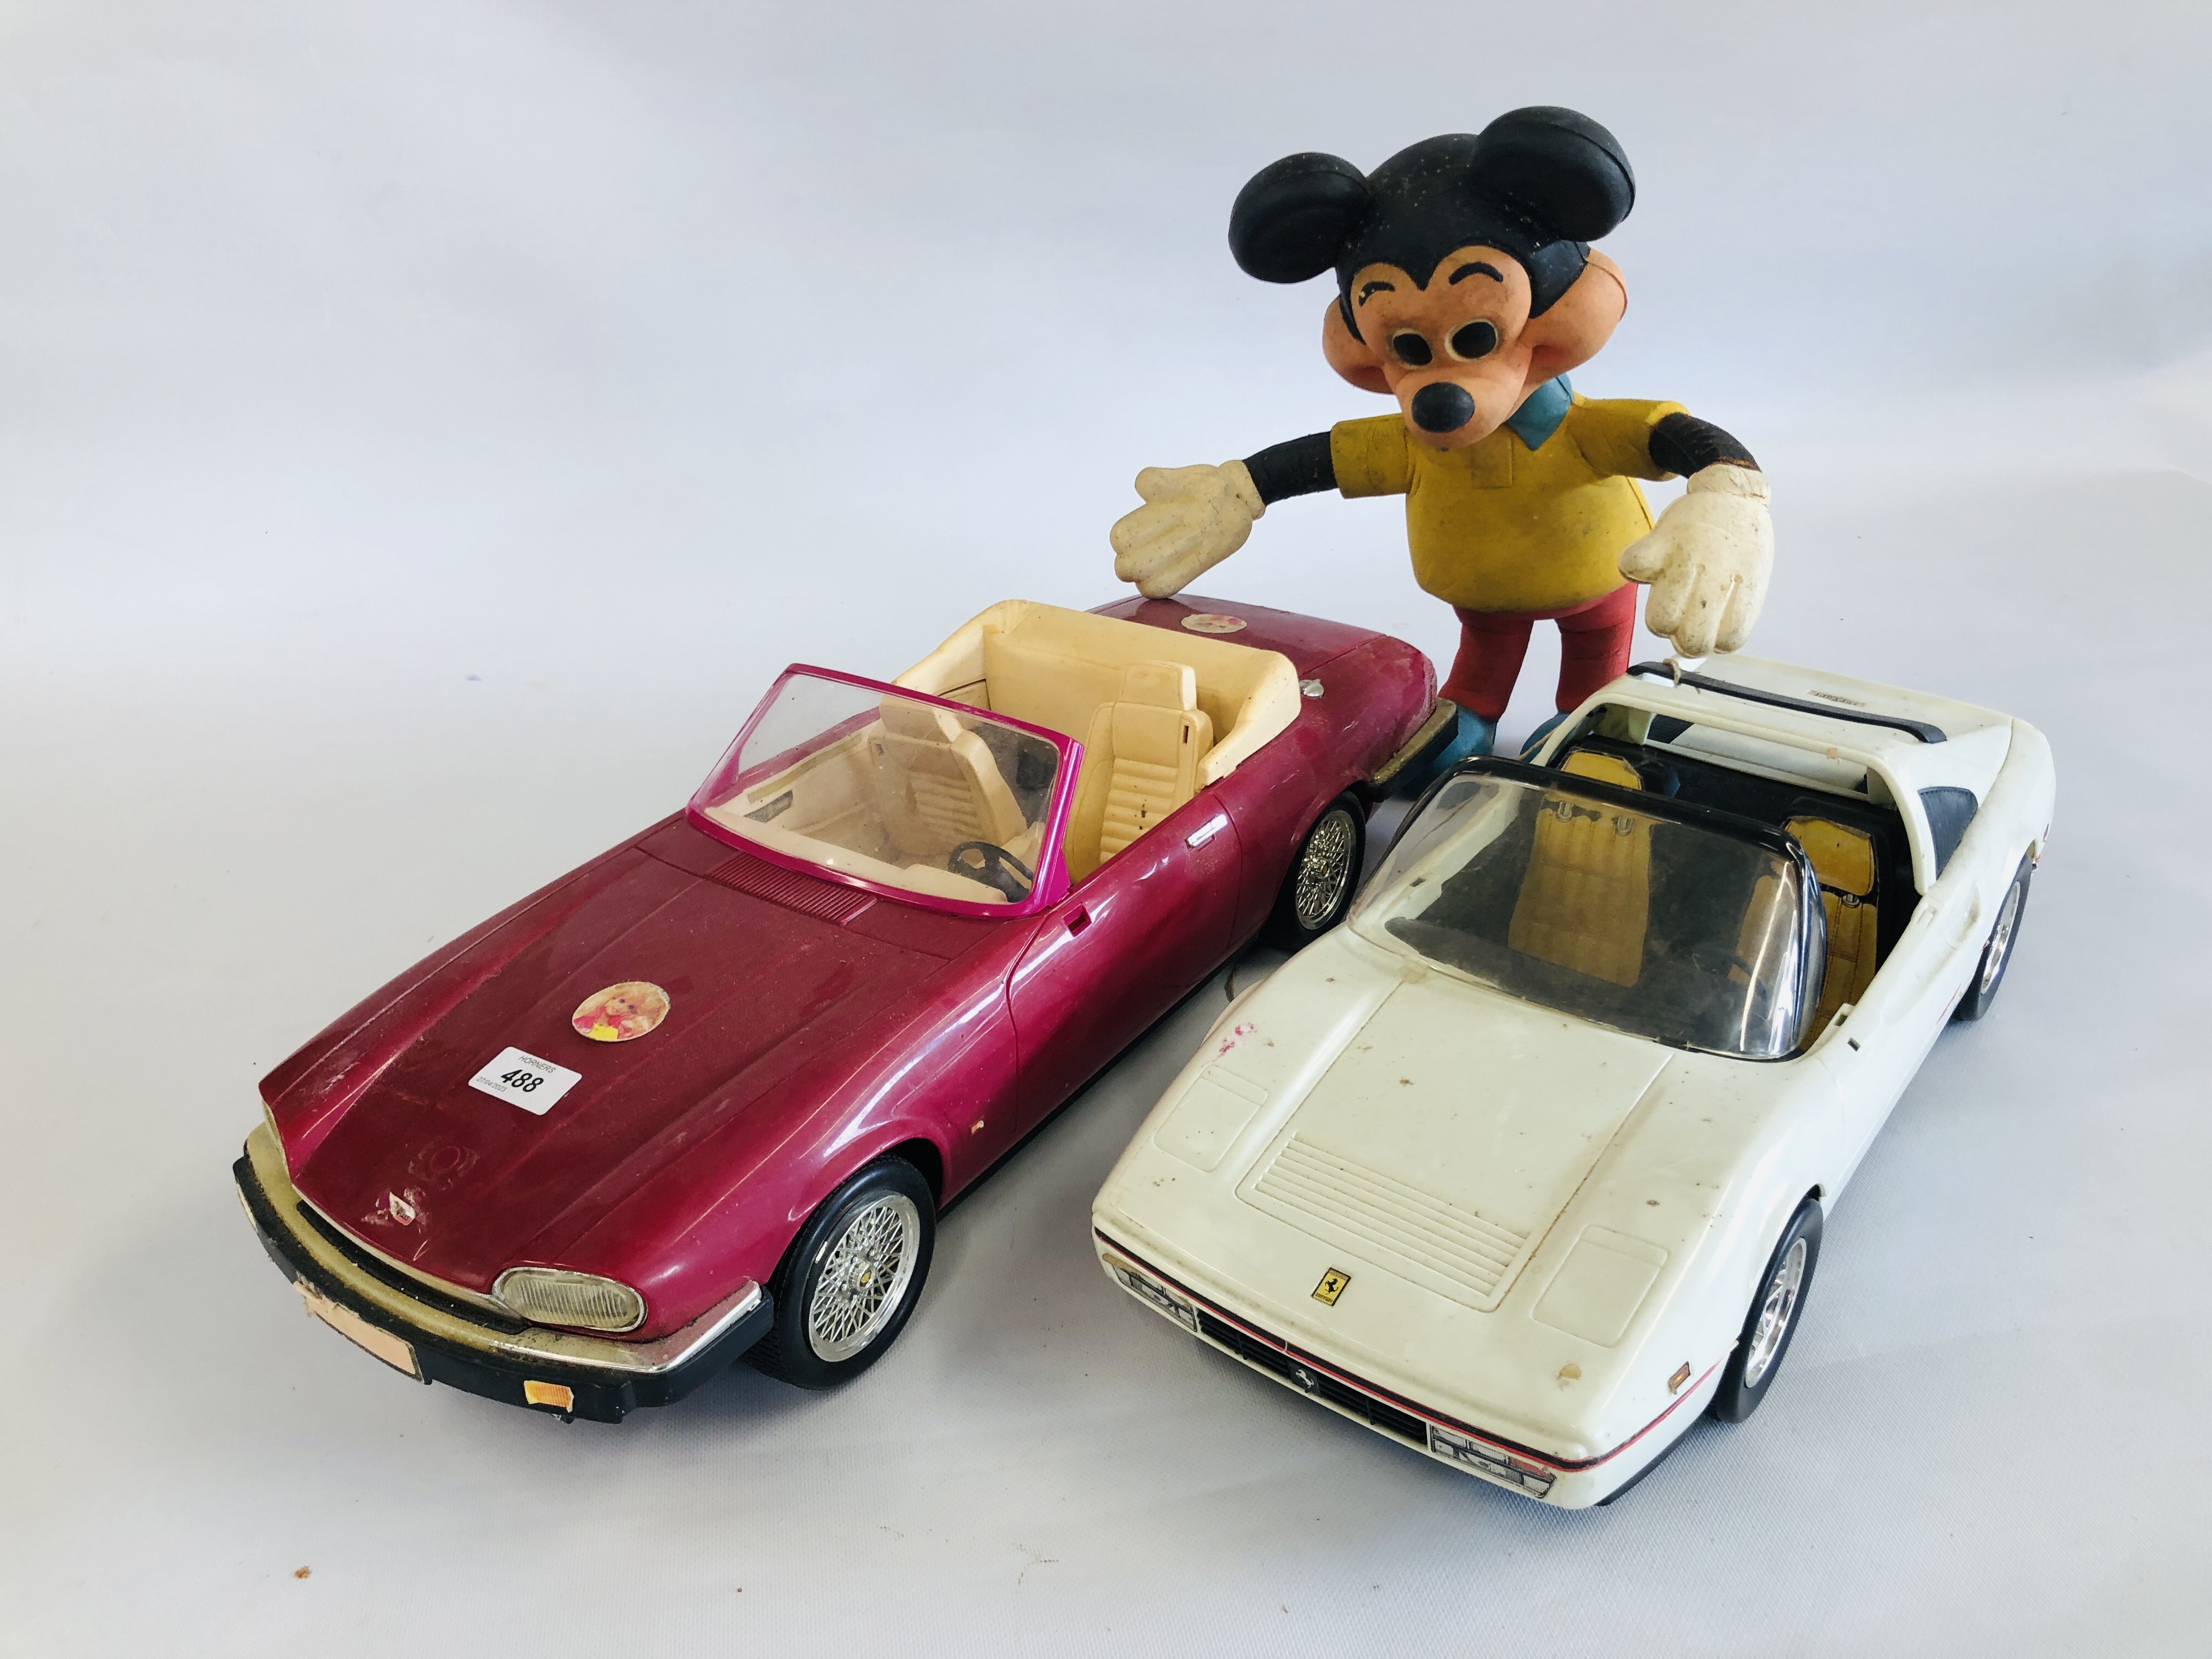 VINTAGE BENDY MICKEY MOUSE ALONG WITH TWO MATTEL MODEL CARS BARBIE XJS & KEN FERRARI.